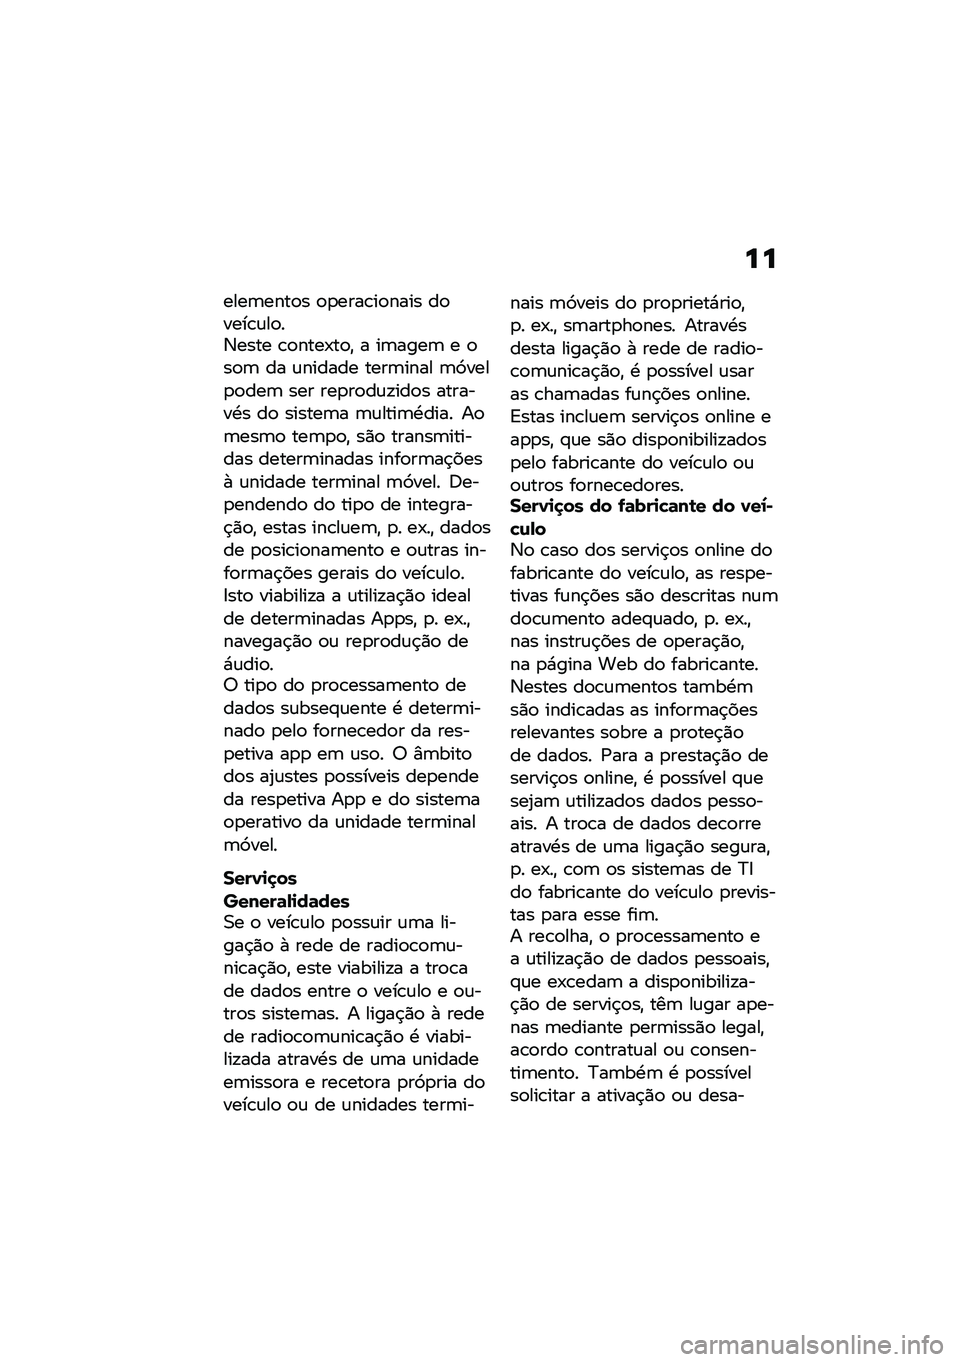 BMW MOTORRAD R NINE T 2021  Manual do condutor (in Portuguese) ��
����	����
� �
�
����\b��
���� ��
����\b�\f��
��3���� �\b�
����-��
�" � ��	����	 � �
��
�	 �� �\f������ ����	���� �	�9����
�
���	 ��� ��